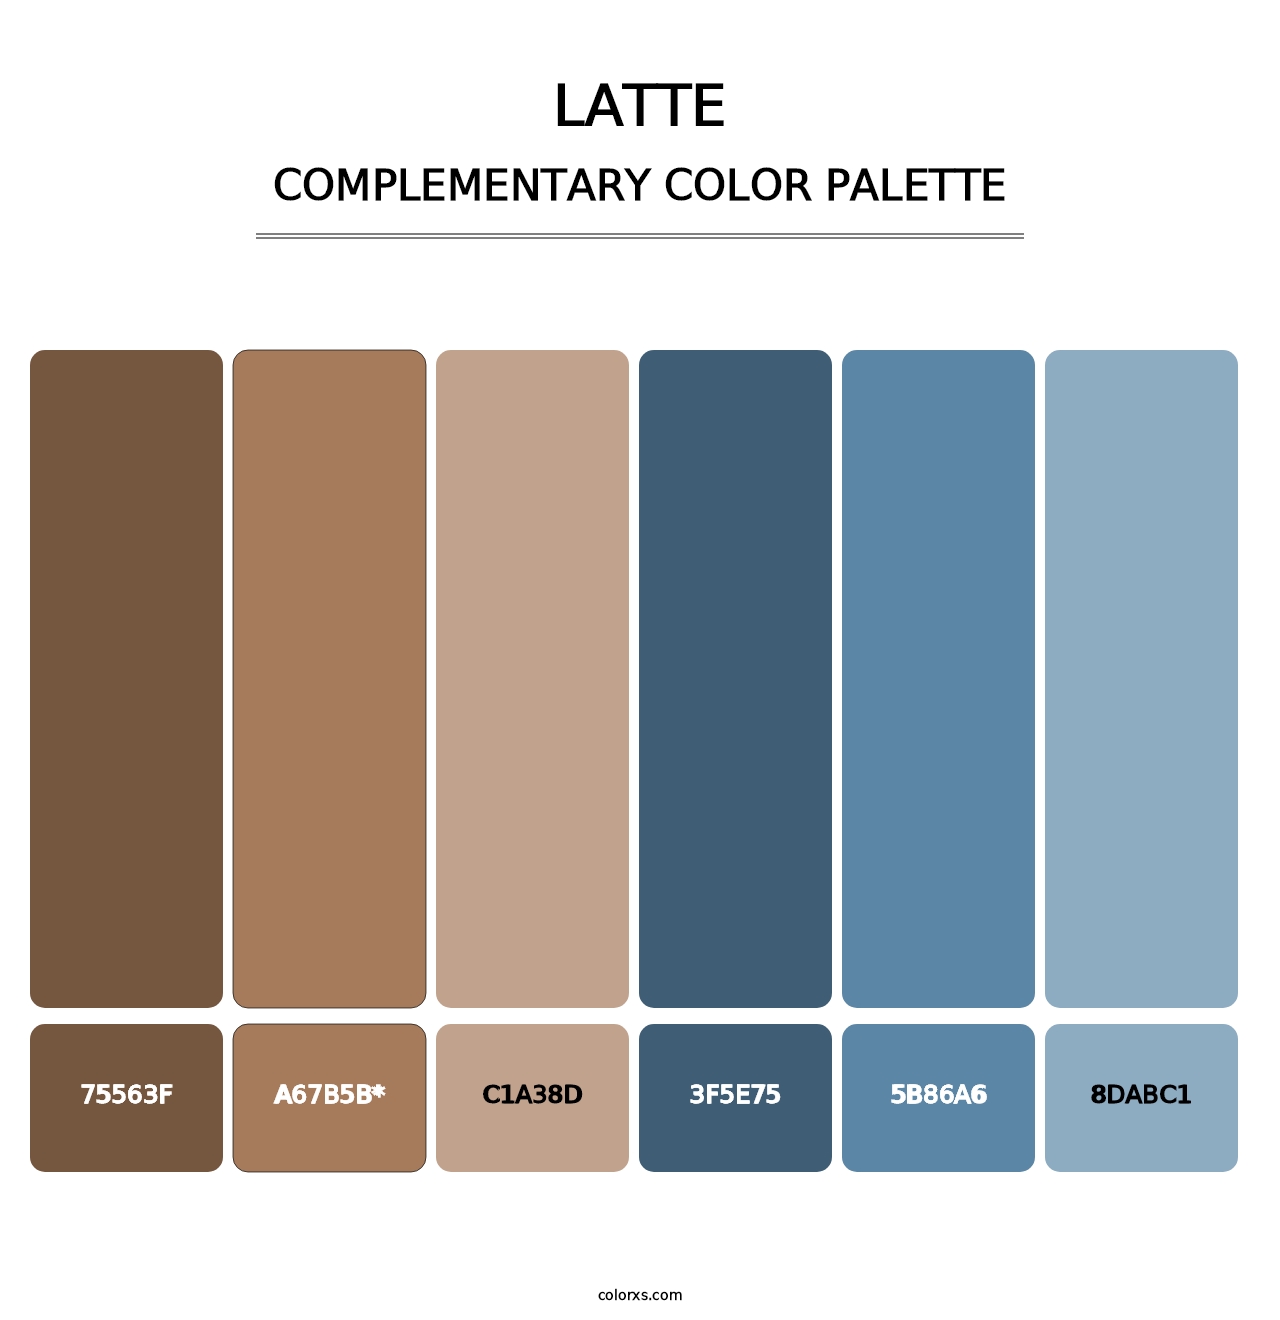 Latte - Complementary Color Palette